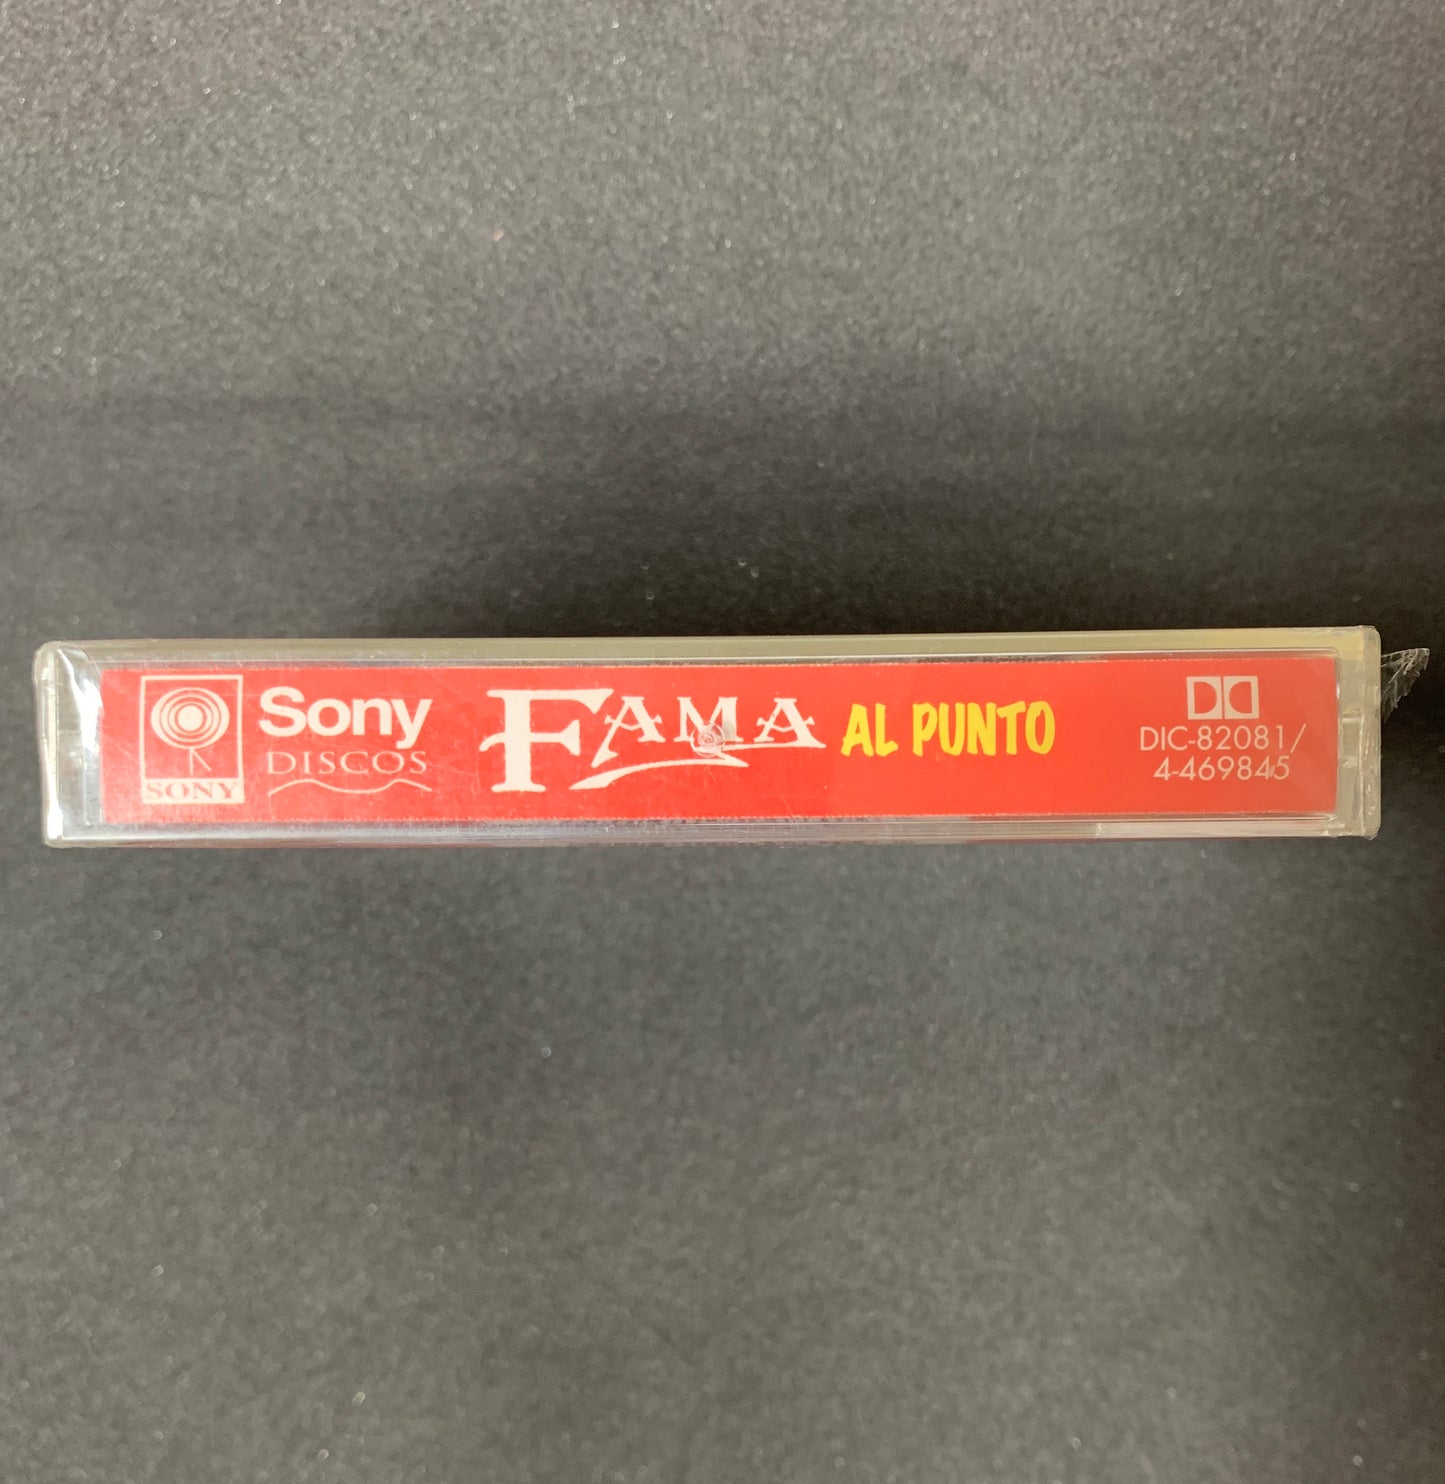 Fama - Al Punto (Cassette)